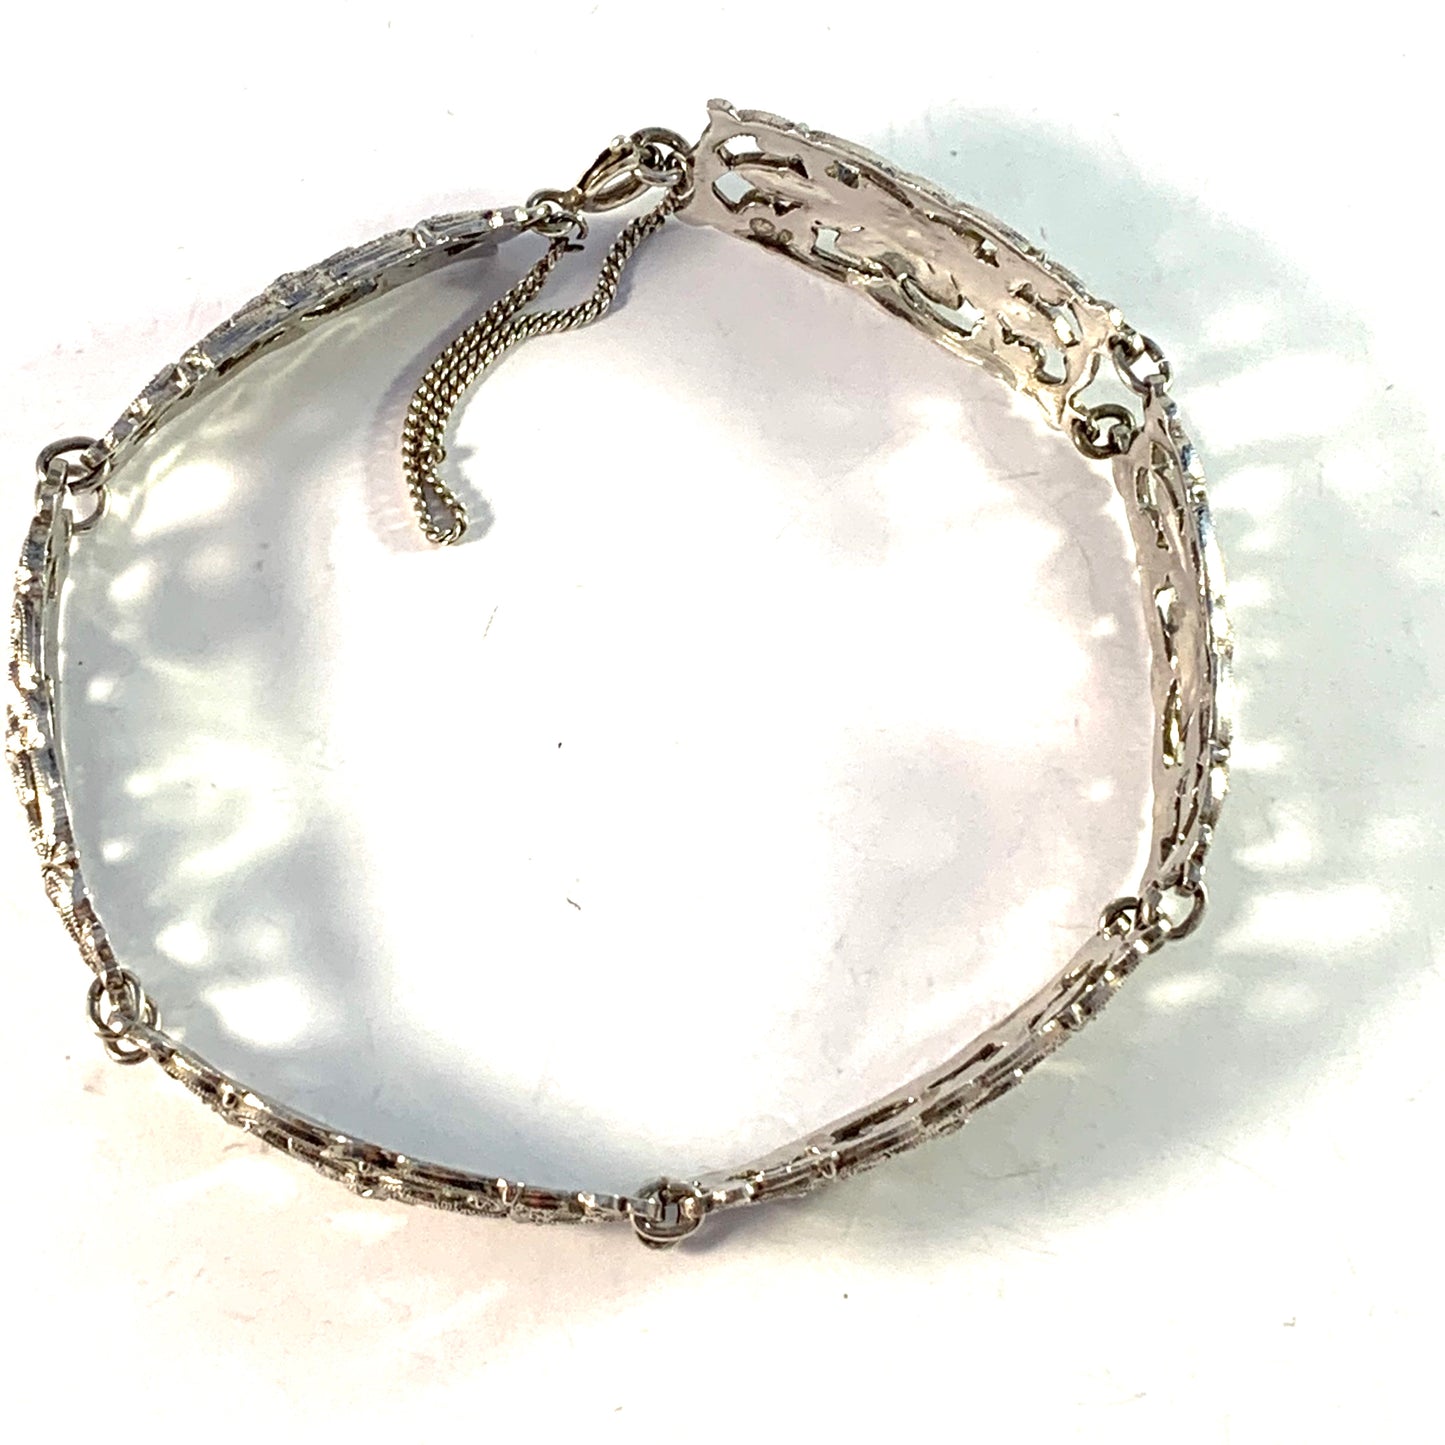 Swedish Import 1950s Sterling Silver Marcasite Bracelet.